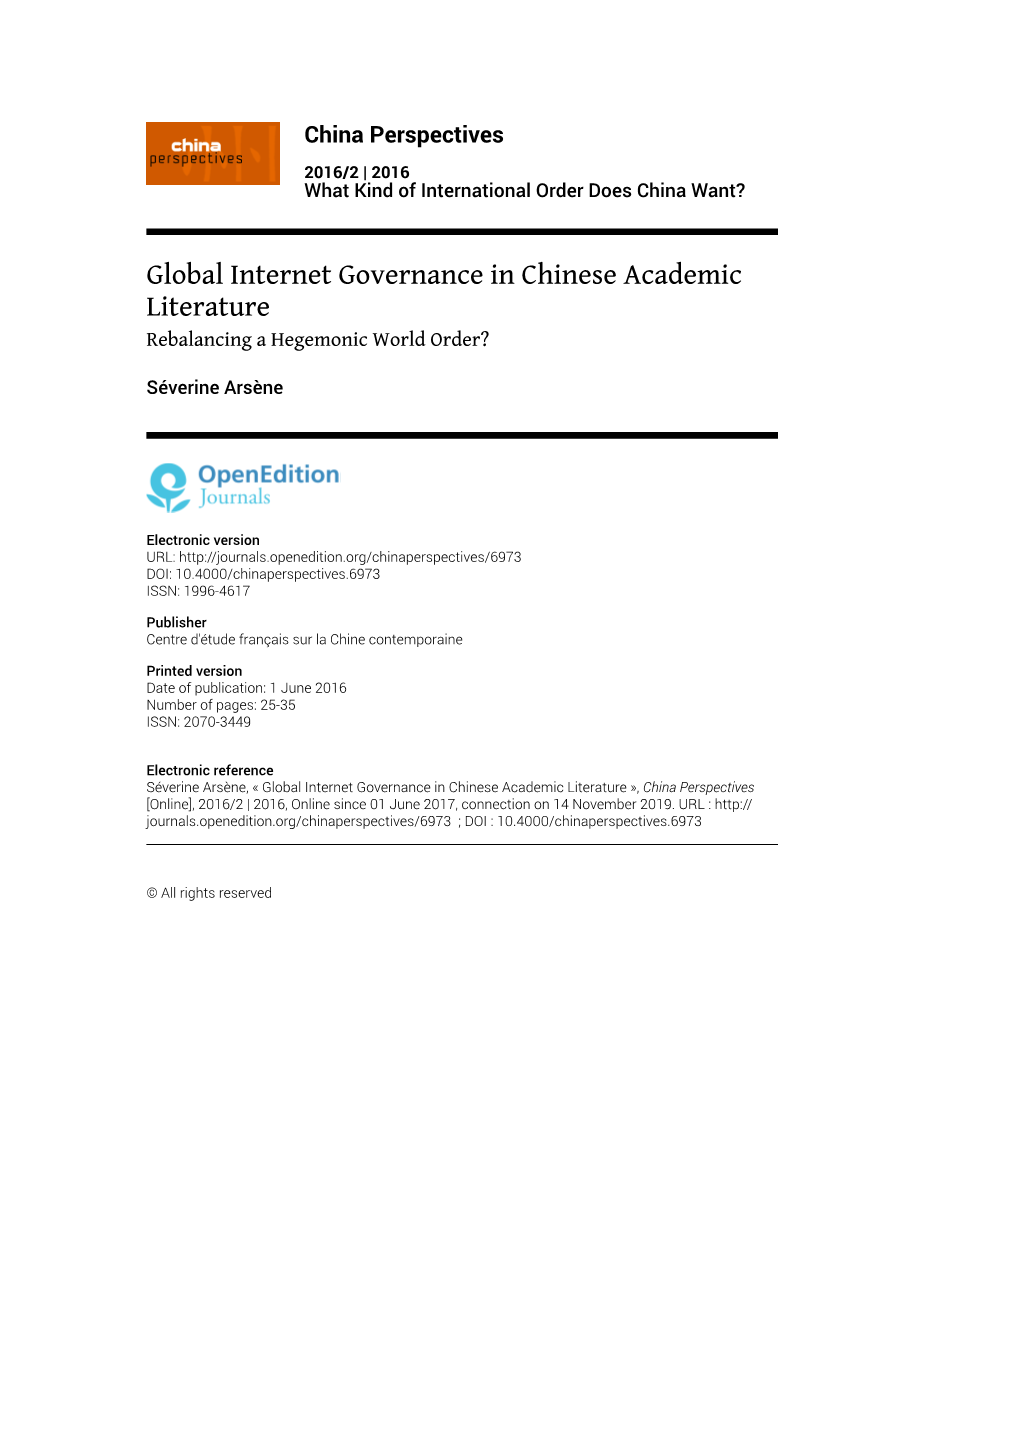 Global Internet Governance in Chinese Academic Literature Rebalancing a Hegemonic World Order?